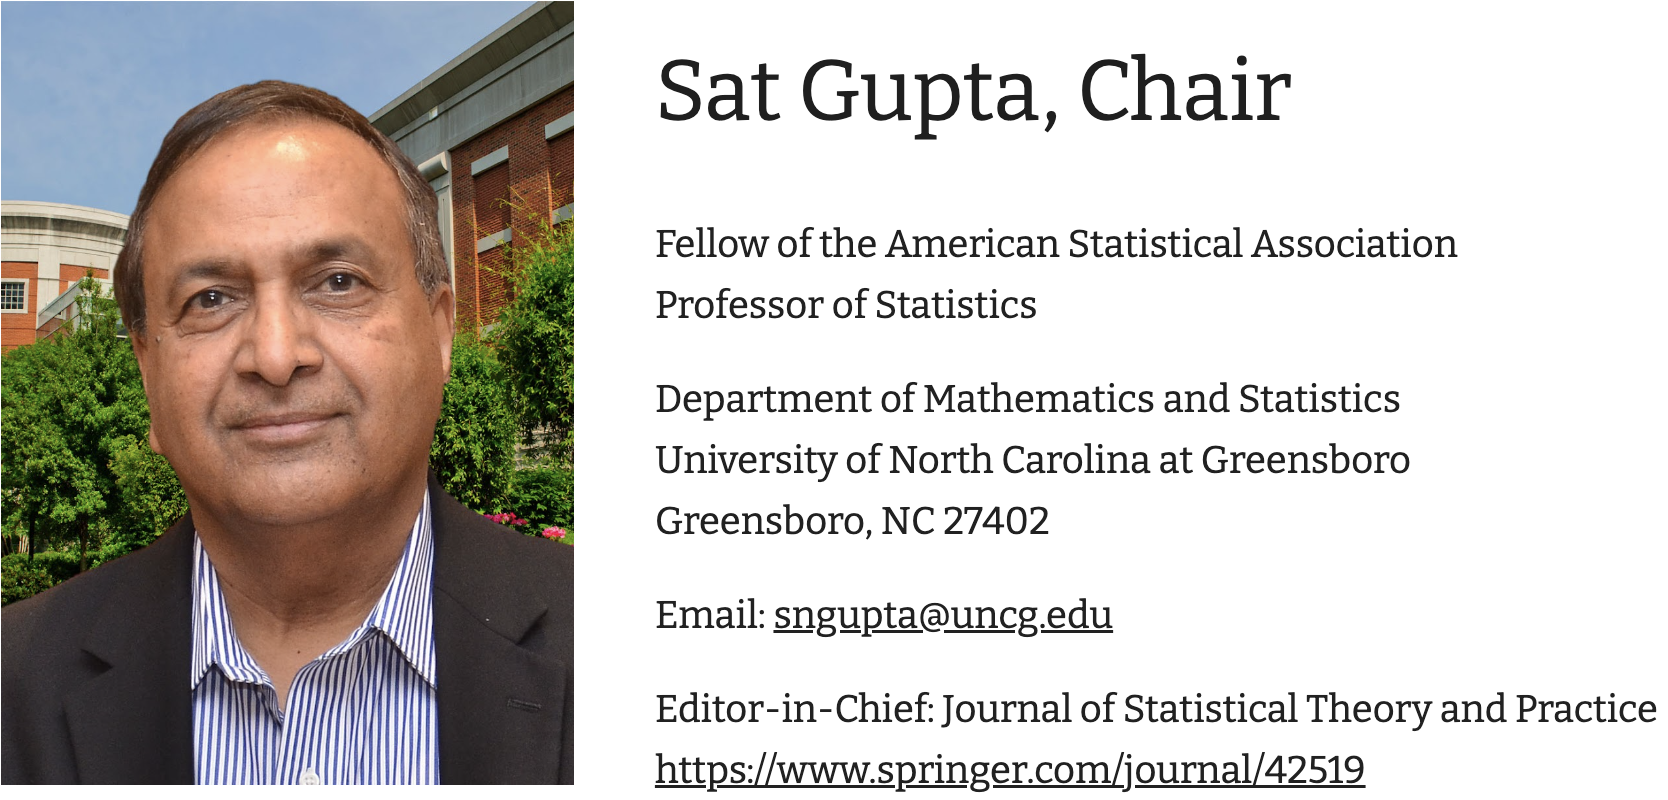 Sat Gupta, Chair. Click to email him at sngupta@uncg.edu